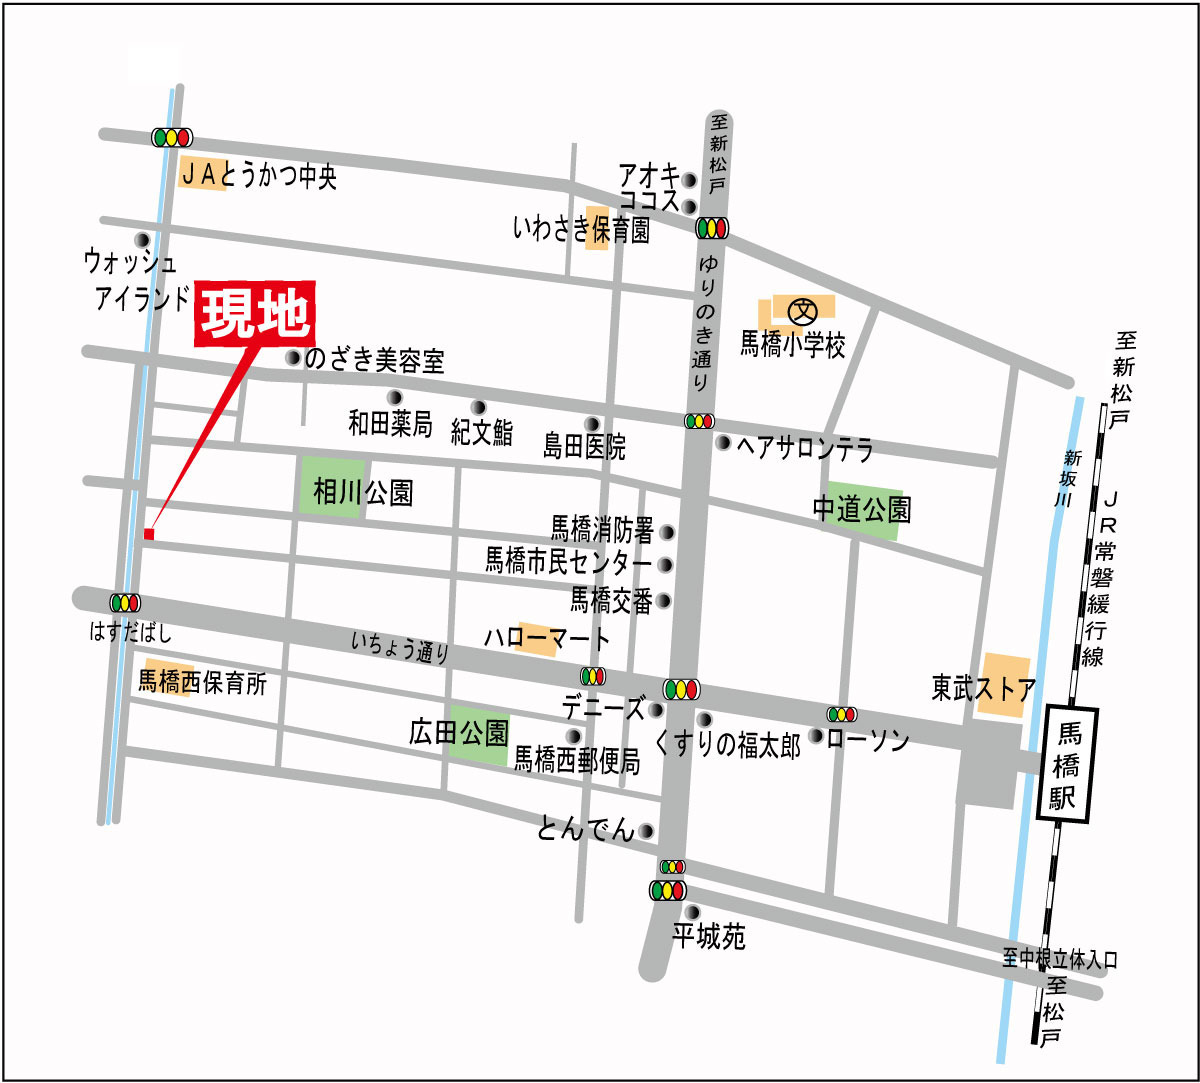 JR「馬橋」駅まで徒歩14分、JR「新松戸」駅までバスで16分で便利な立地環境です。